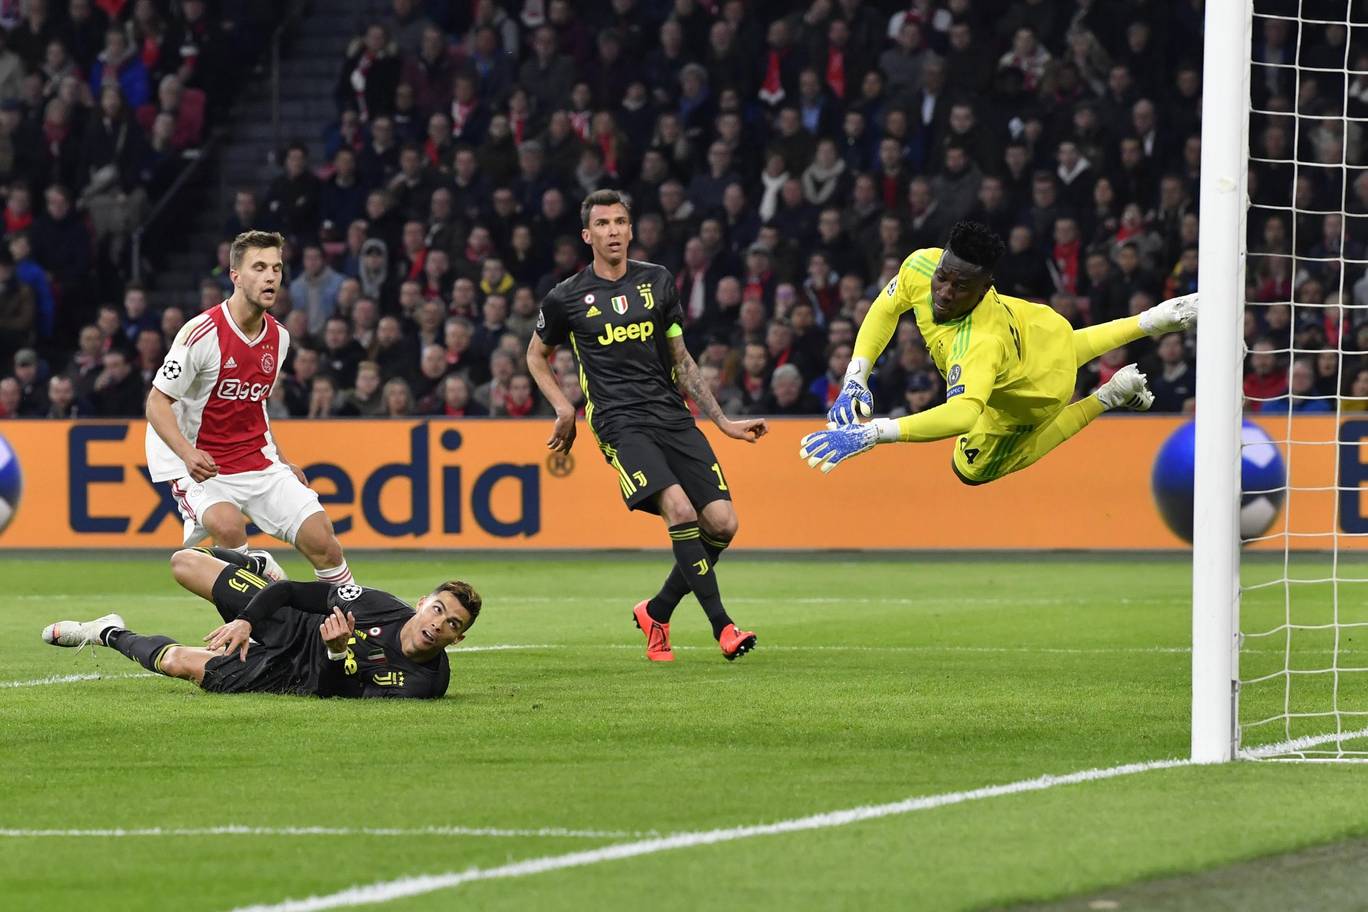 Ajax 1-1 Juventus: David Neres solo goal cancels out Cristiano Ronaldo header in Champions League quarter-final | UEFA Champions League